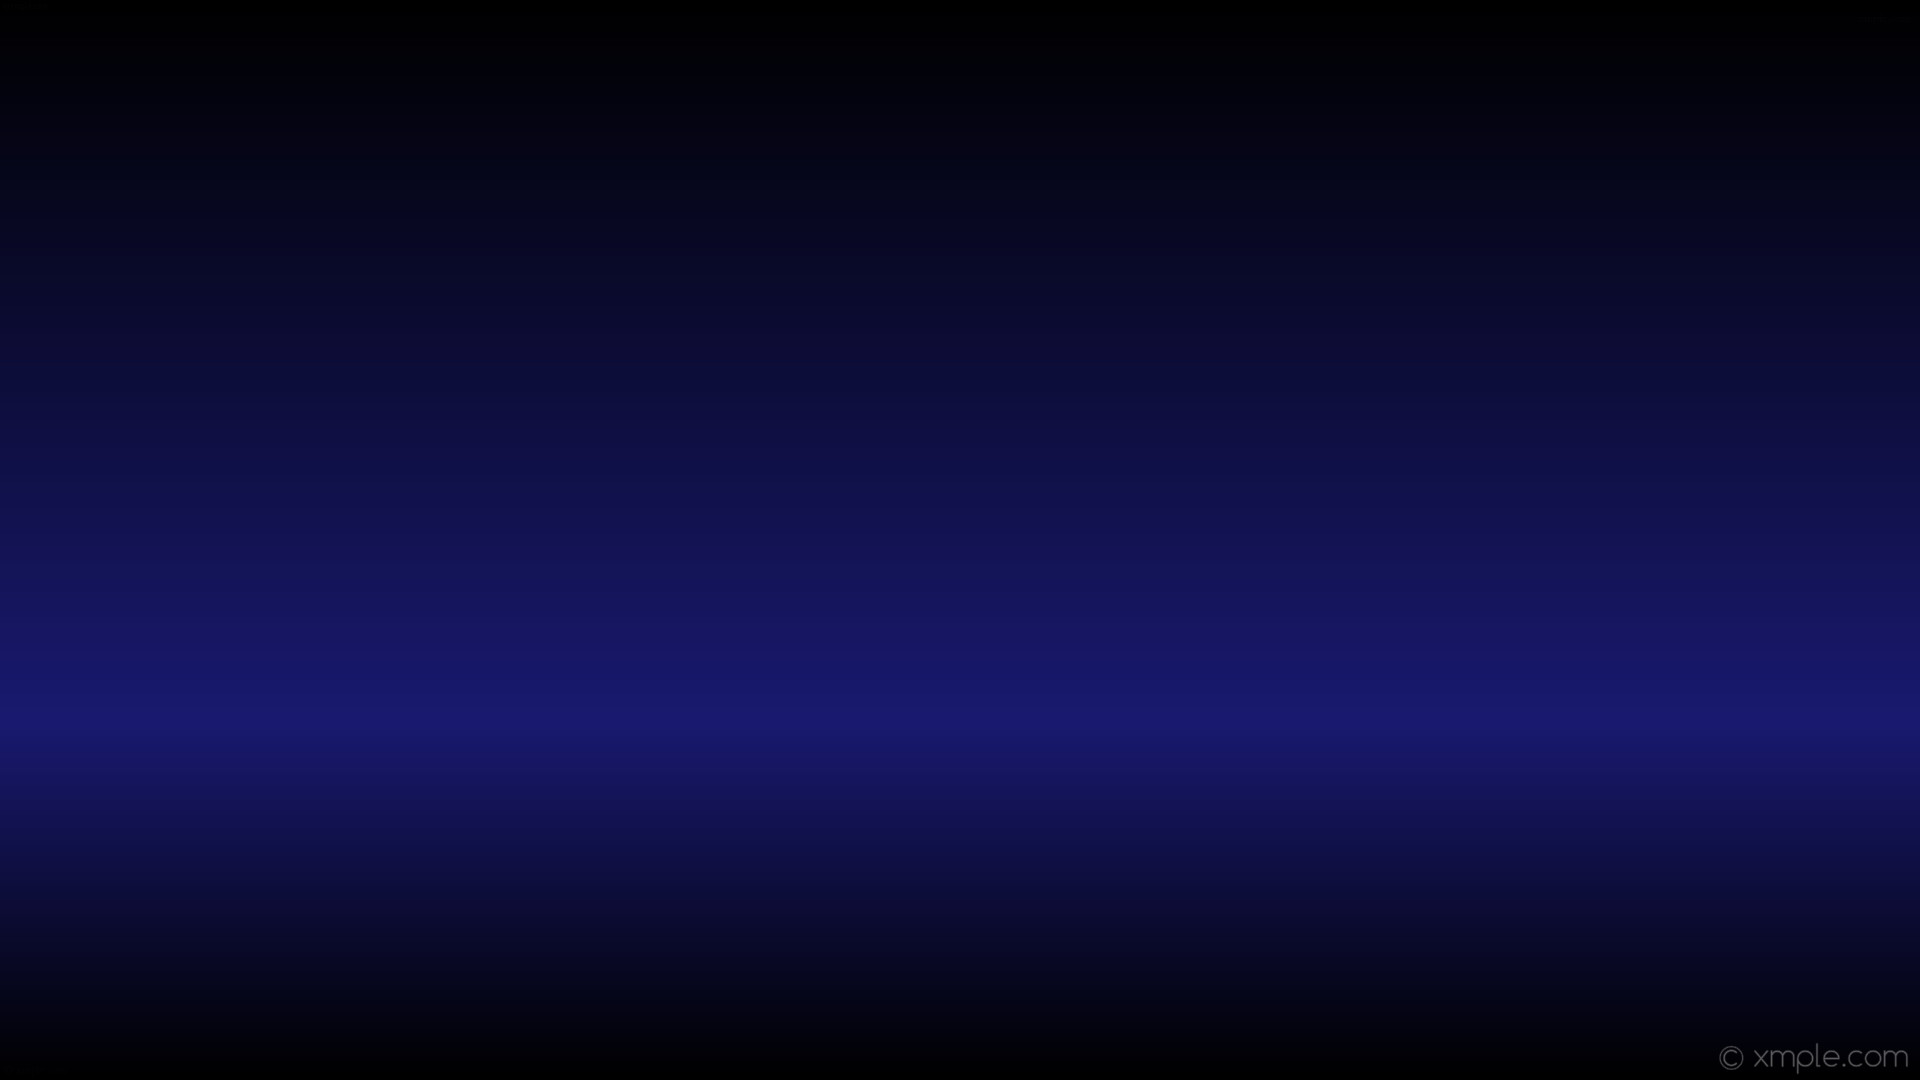 1920x1080 wallpaper linear highlight black blue gradient midnight blue #000000  #191970 90Â° 67%